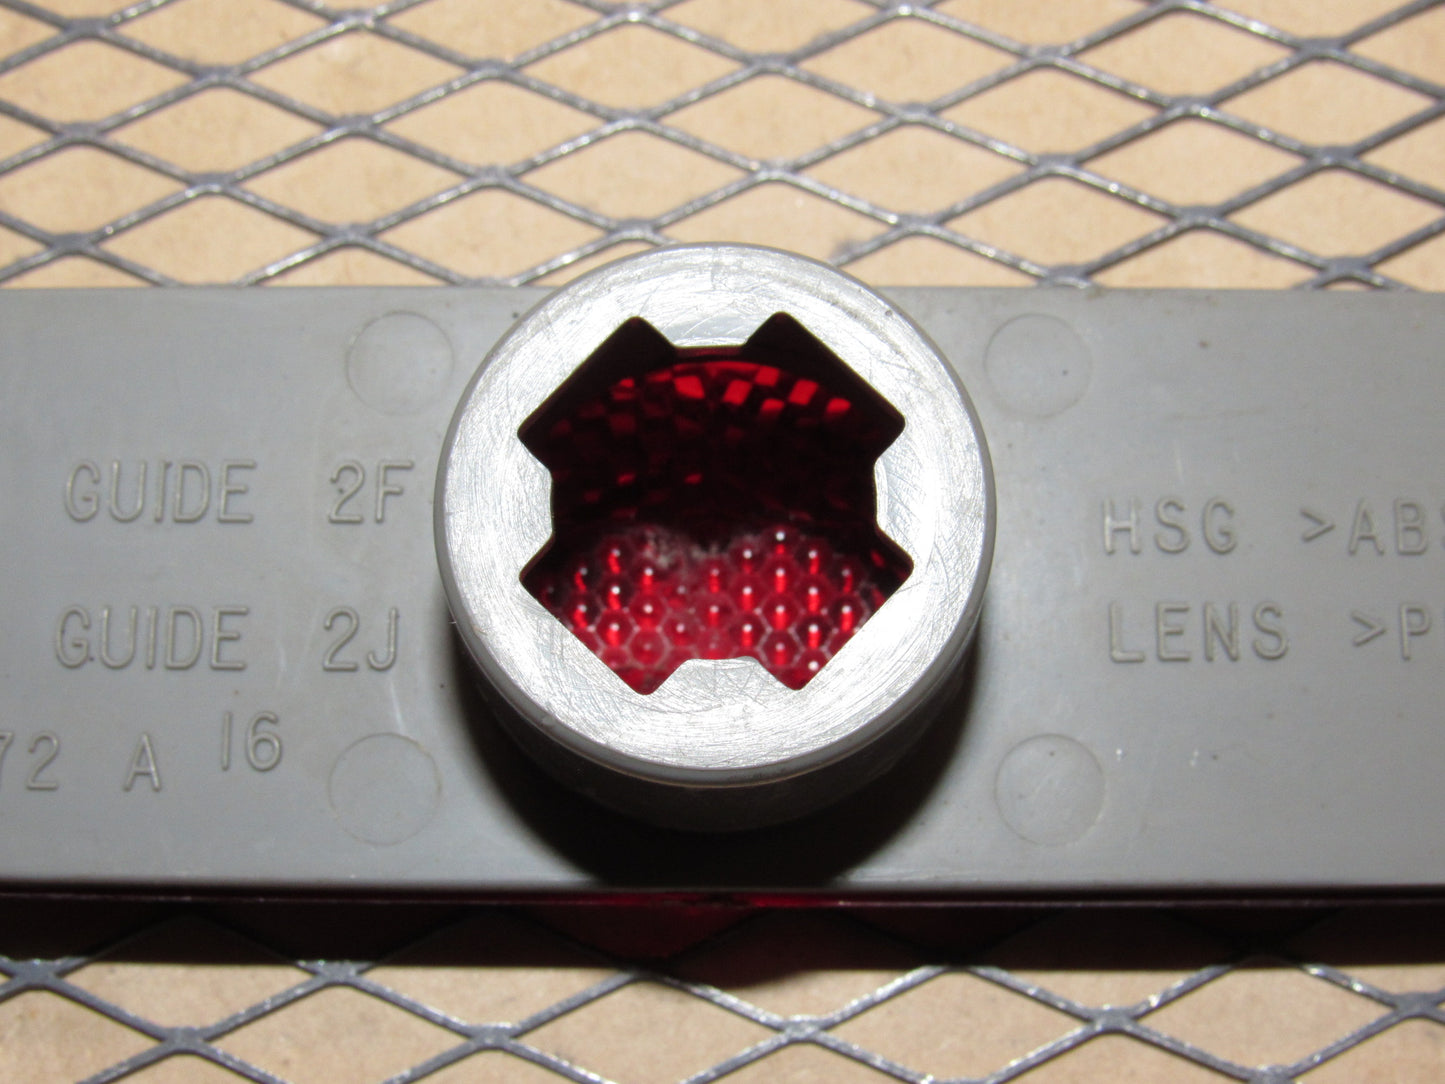 93-02 Pontiac Firebird OEM Rear Side Marker Light Lamp - Right